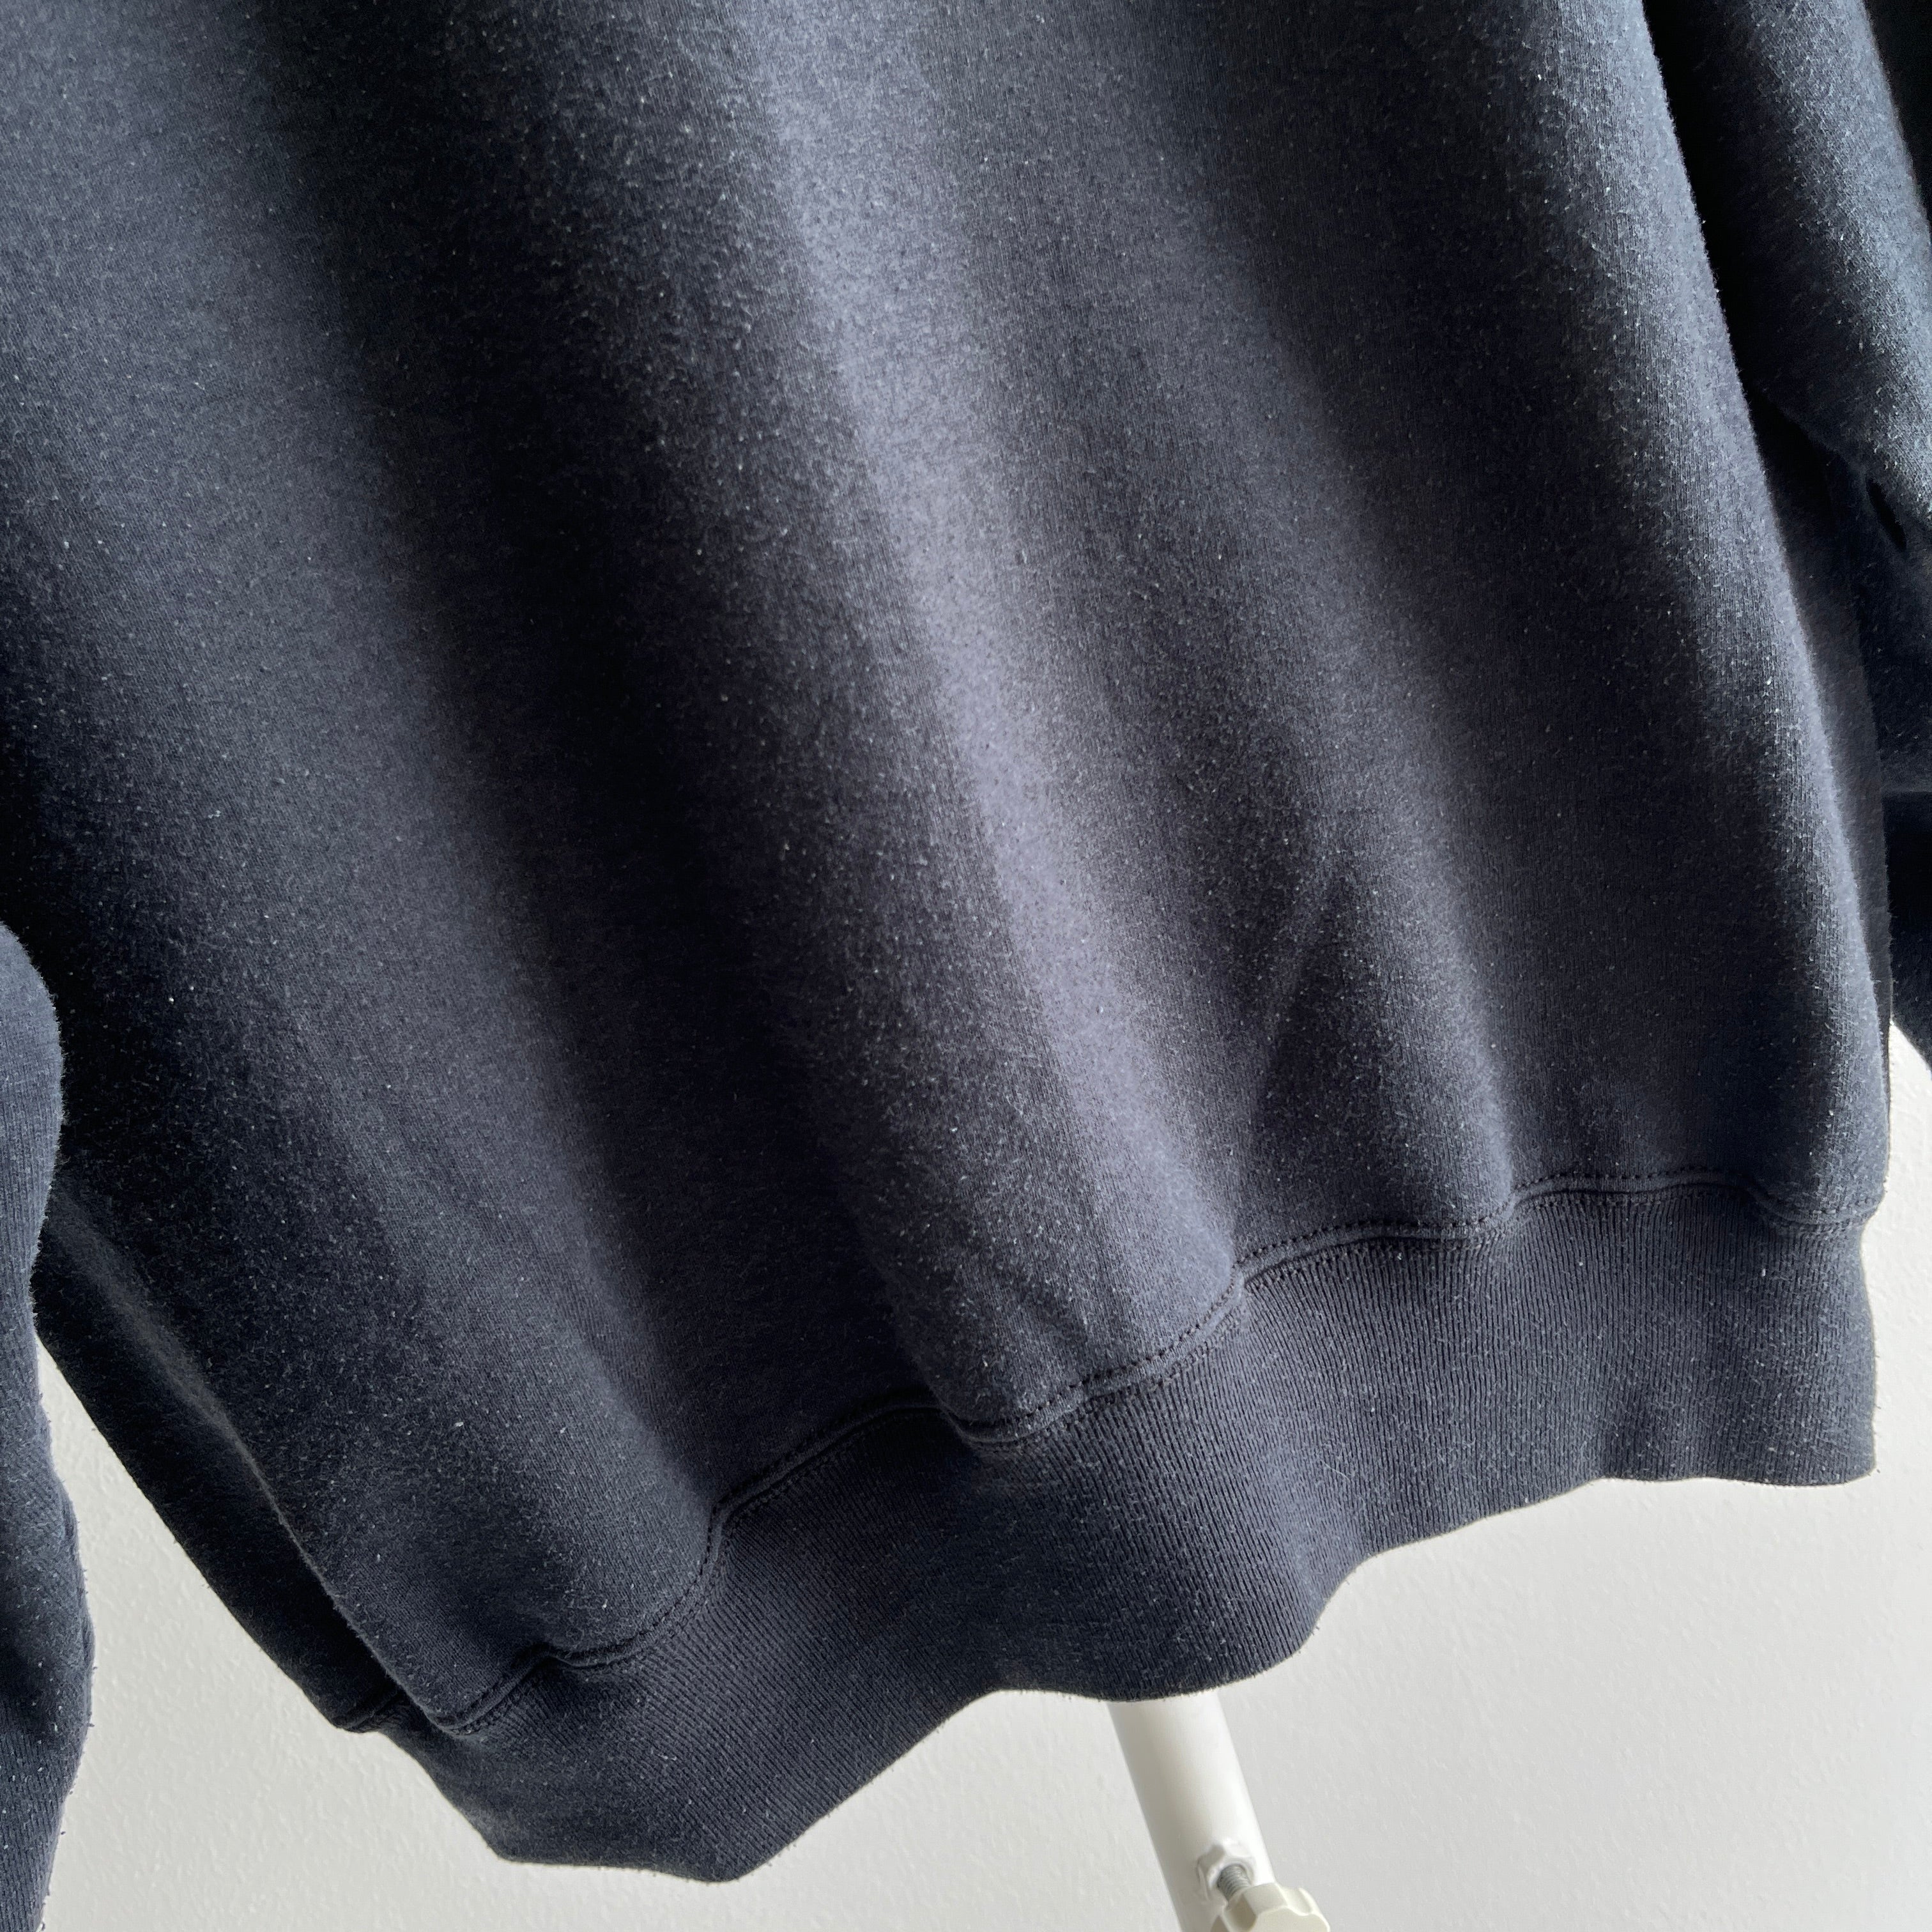 1990s BVD Blank Larger Faded Black Sweatshirt - USA Made